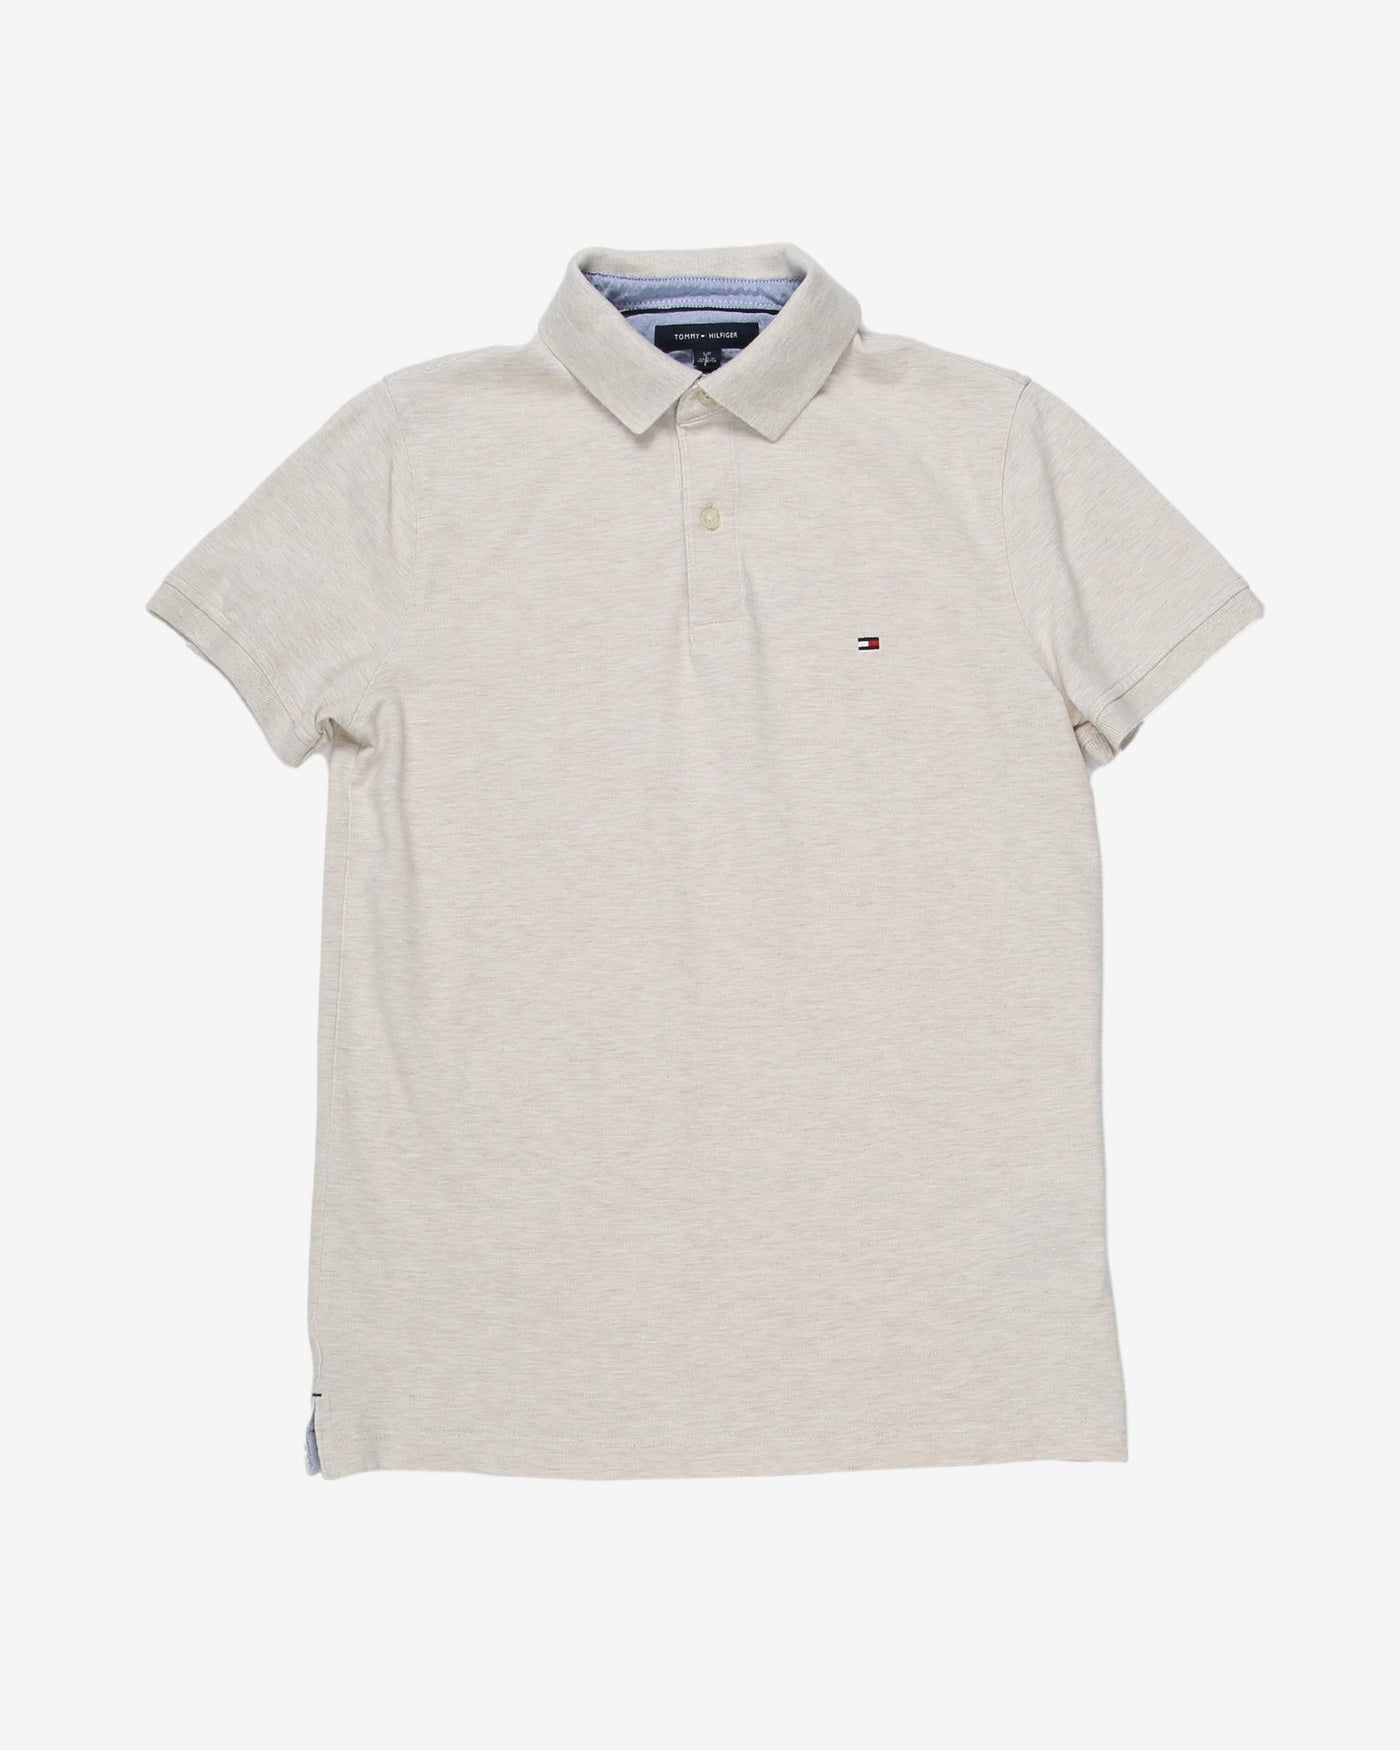 Tommy Hilfiger Beige  / Cream Polo Shirt - S